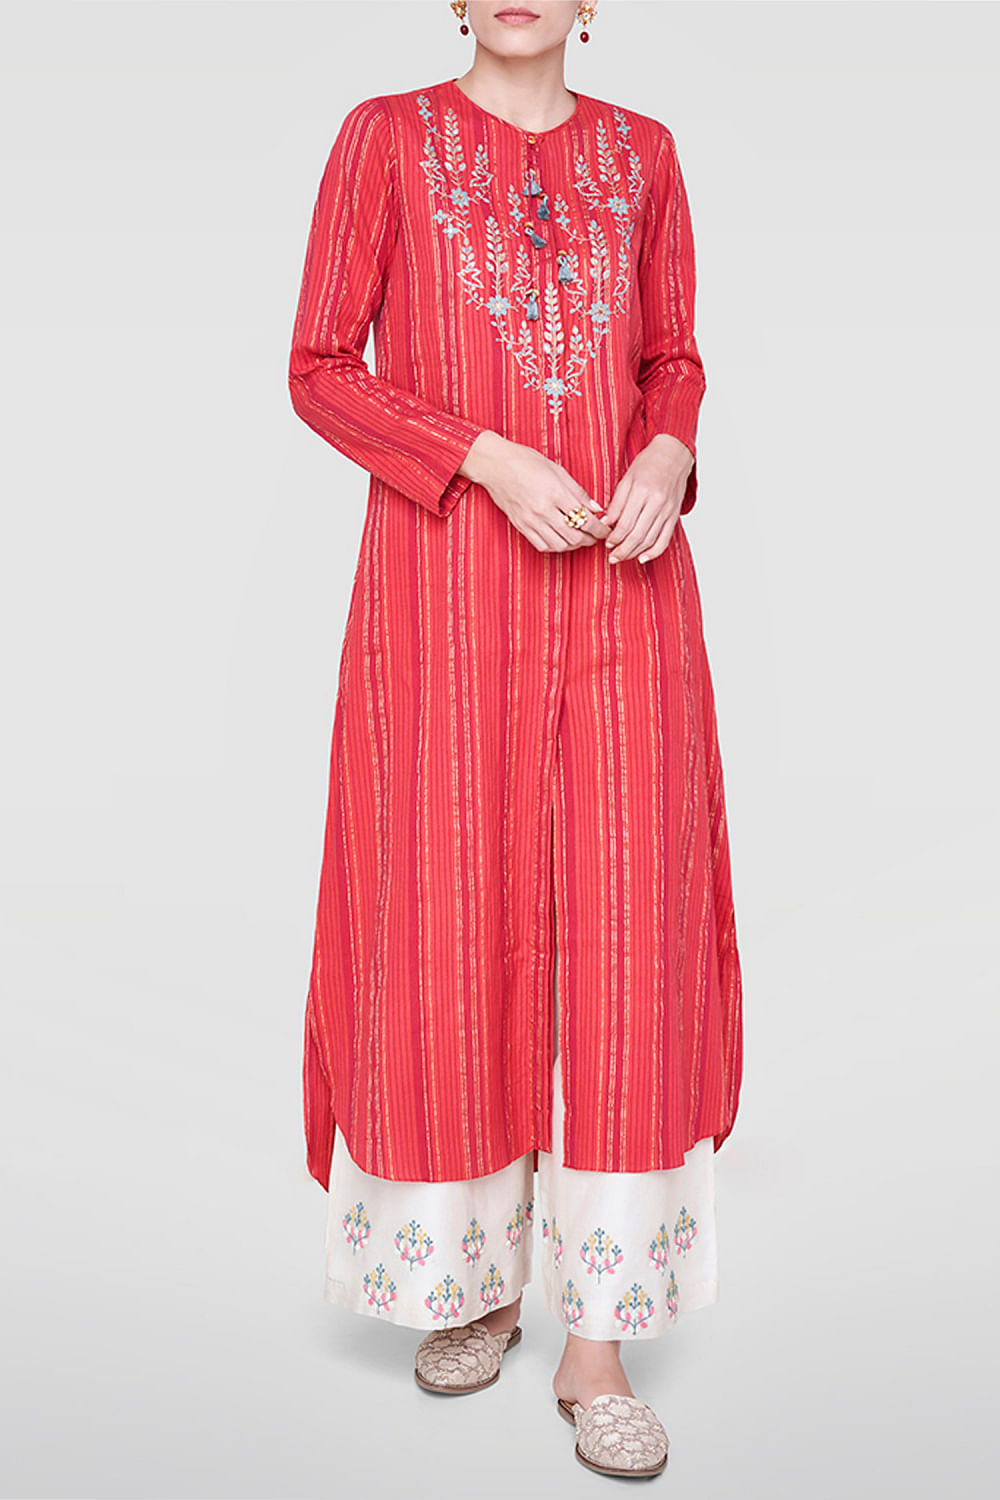 Sabyasachi Mukherjee - India 🇮🇳 | Designer party wear dresses, Pakistani  dress design, Indian fashion